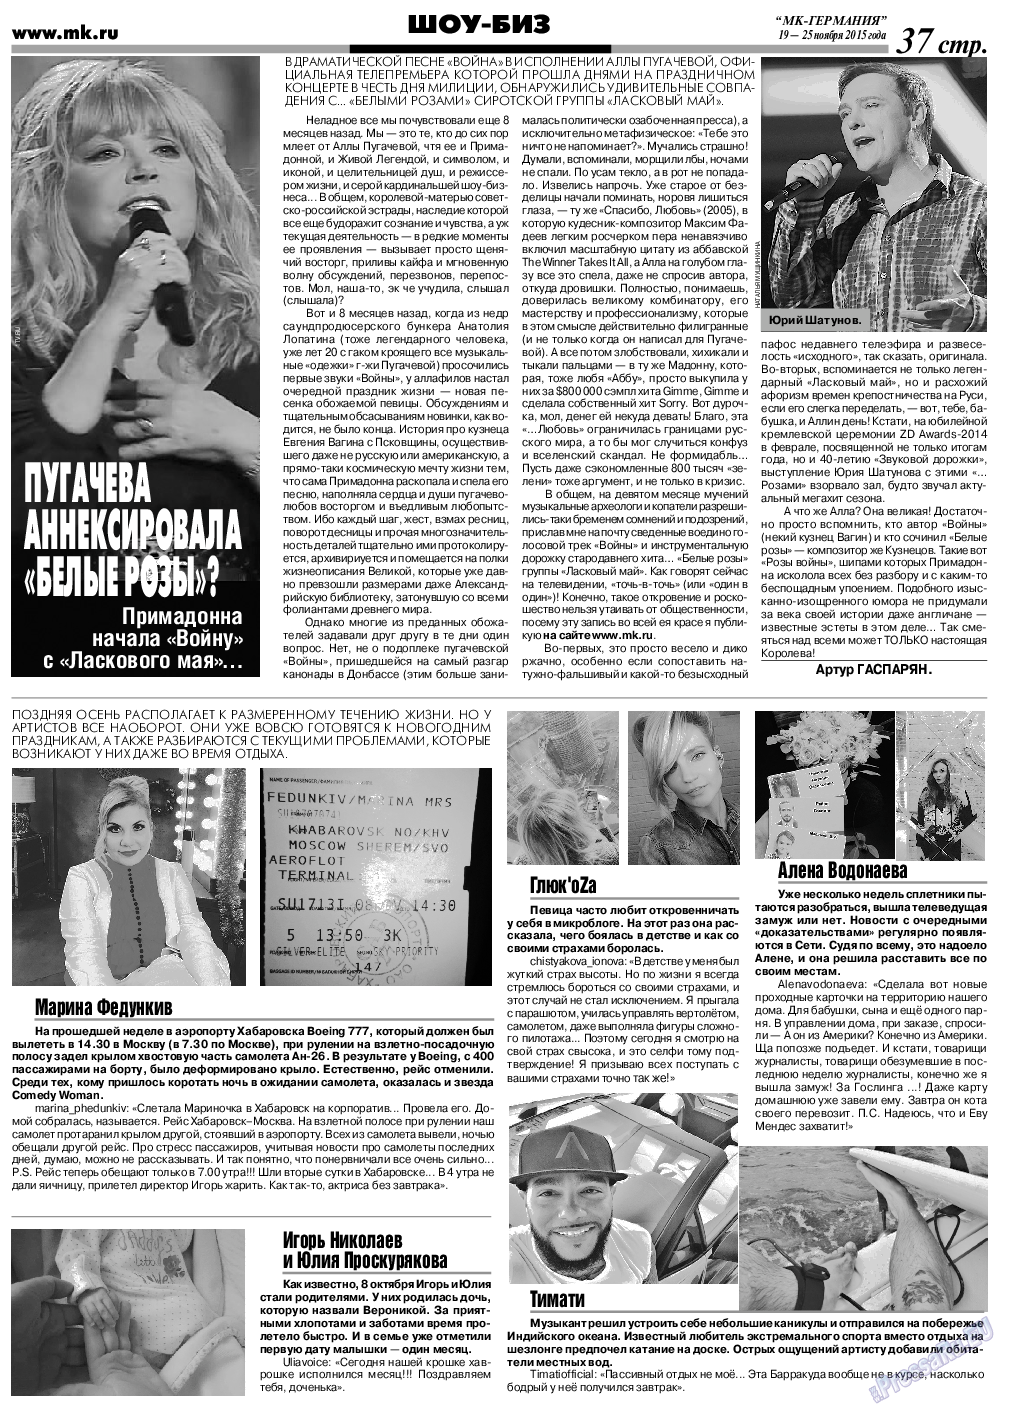 МК-Германия, газета. 2015 №47 стр.37